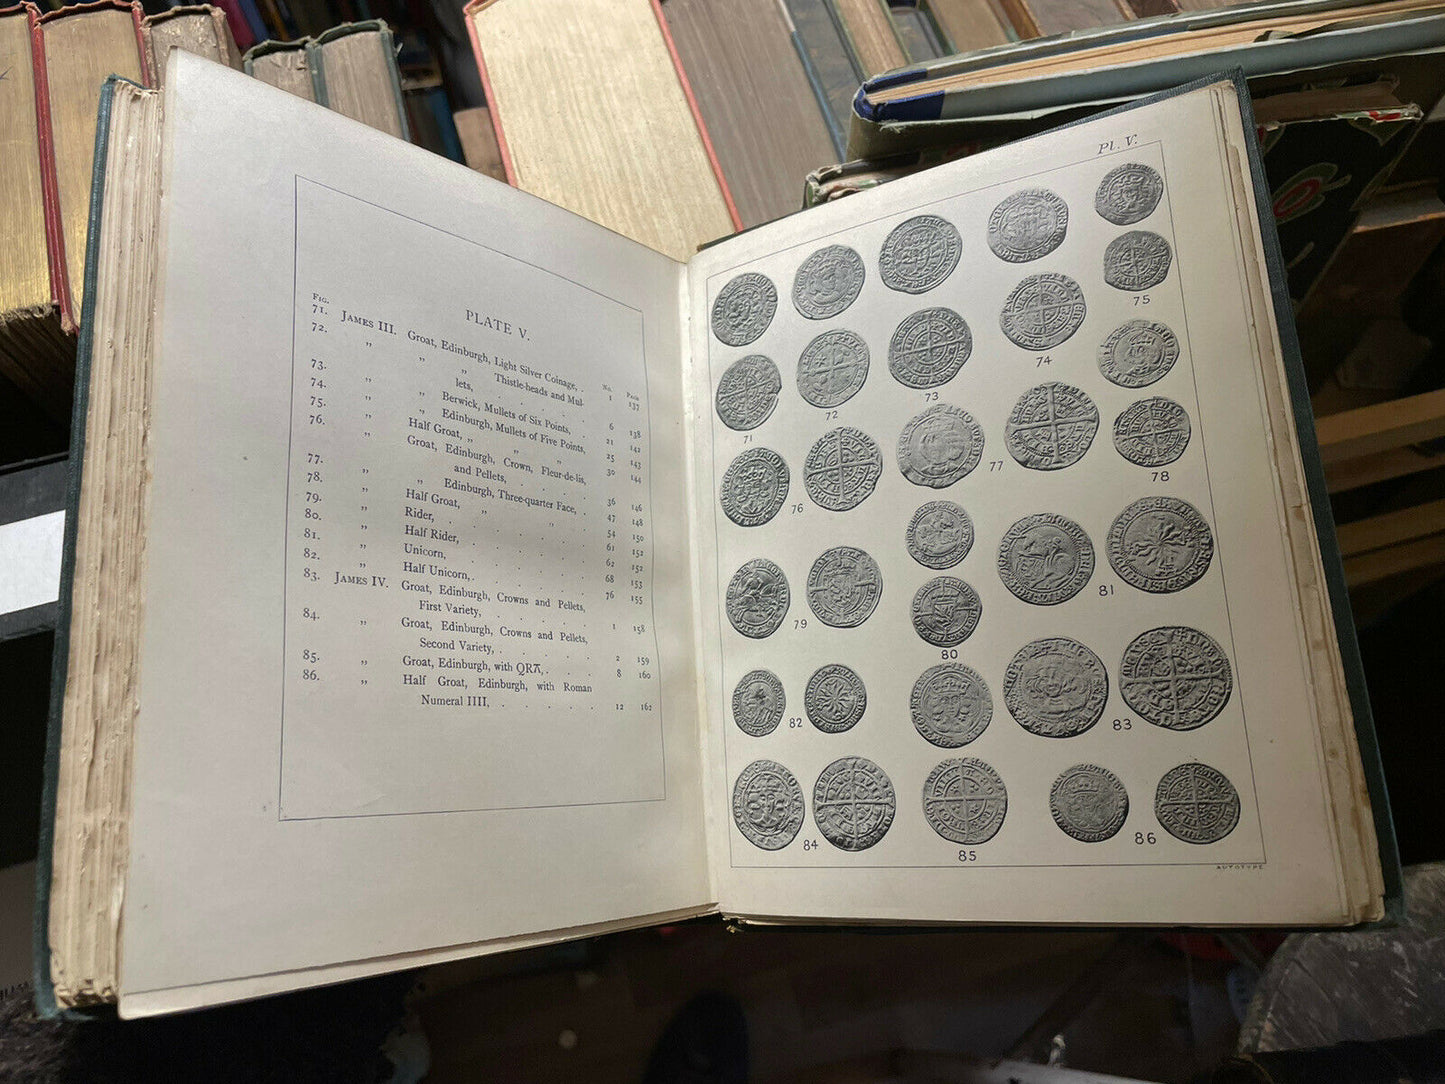 Catalogue of Scottish Coins National Museum Edinburgh : Richardson : Numismatics